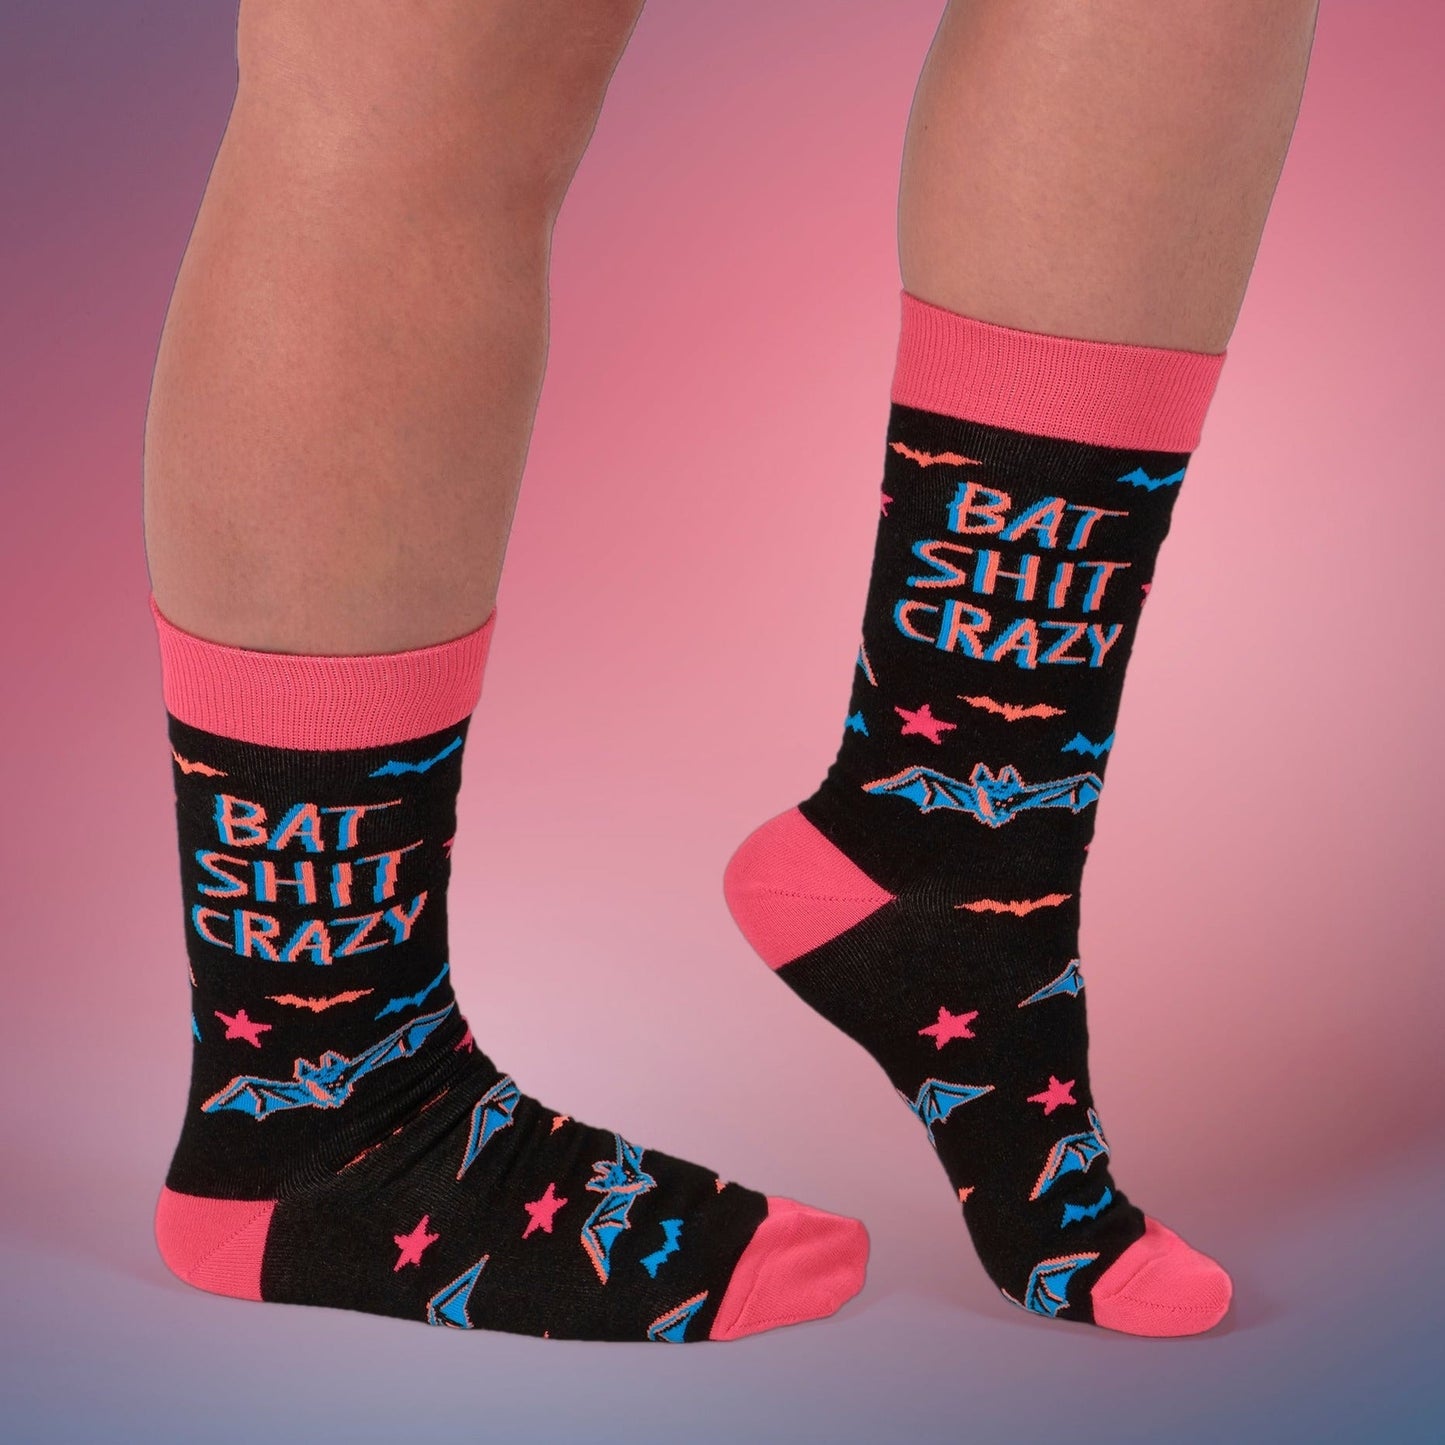 Bat Crazy Socks | Women's Colorful Halloween-Themed Self-Expression Socks